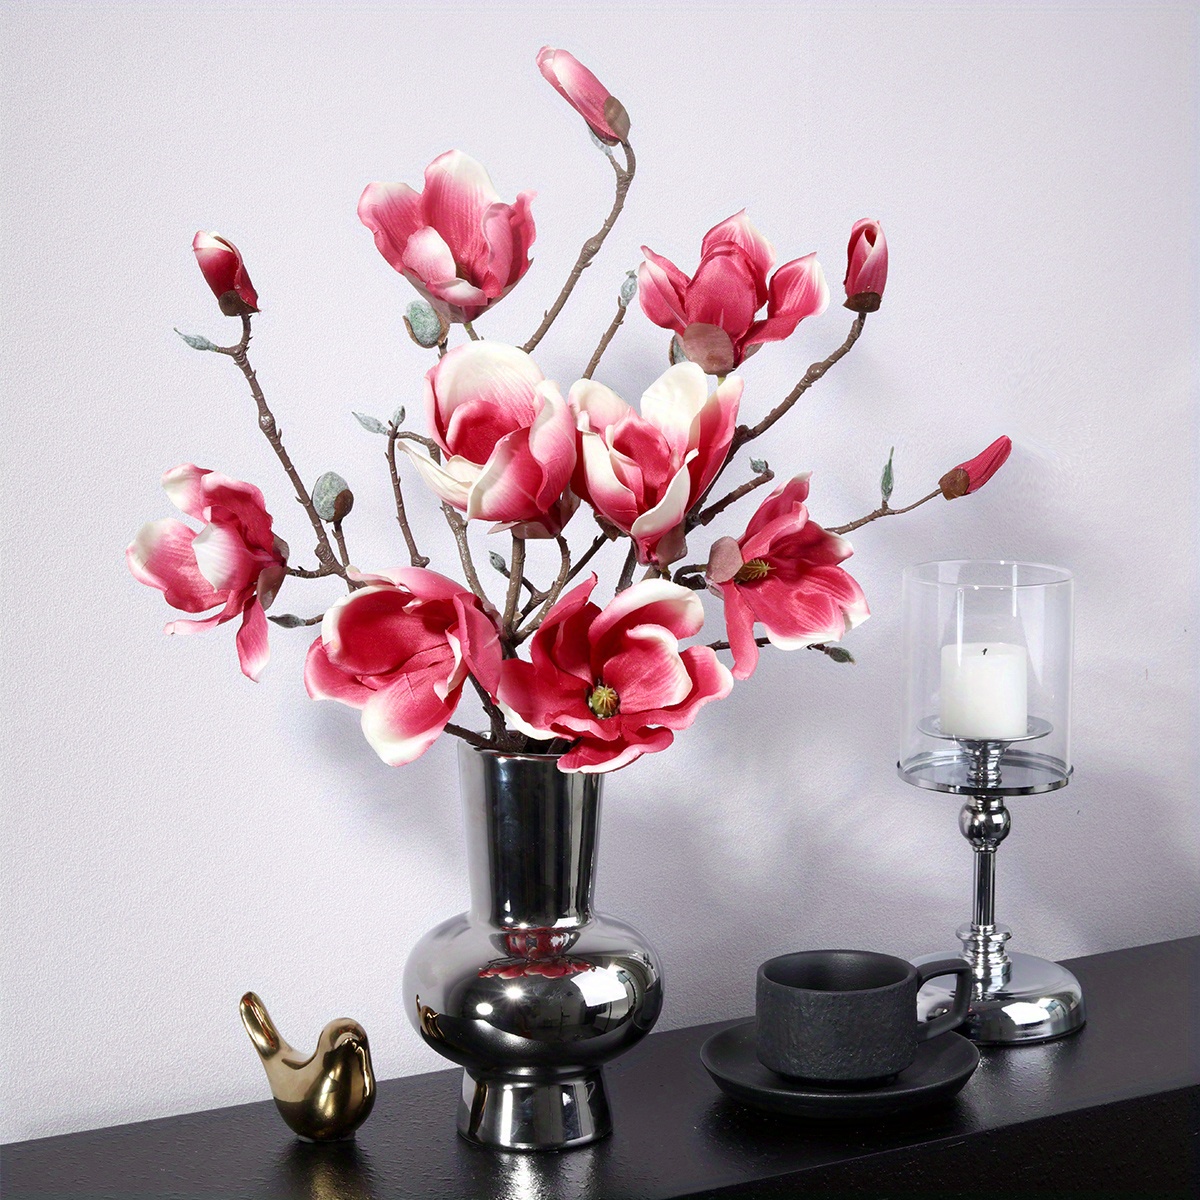 2 Heads/Sticks 36CM High Quality Faux Magnolia Silk Flower Bridal Bouquet  Wedding Party Garden Home Office Table Decoration